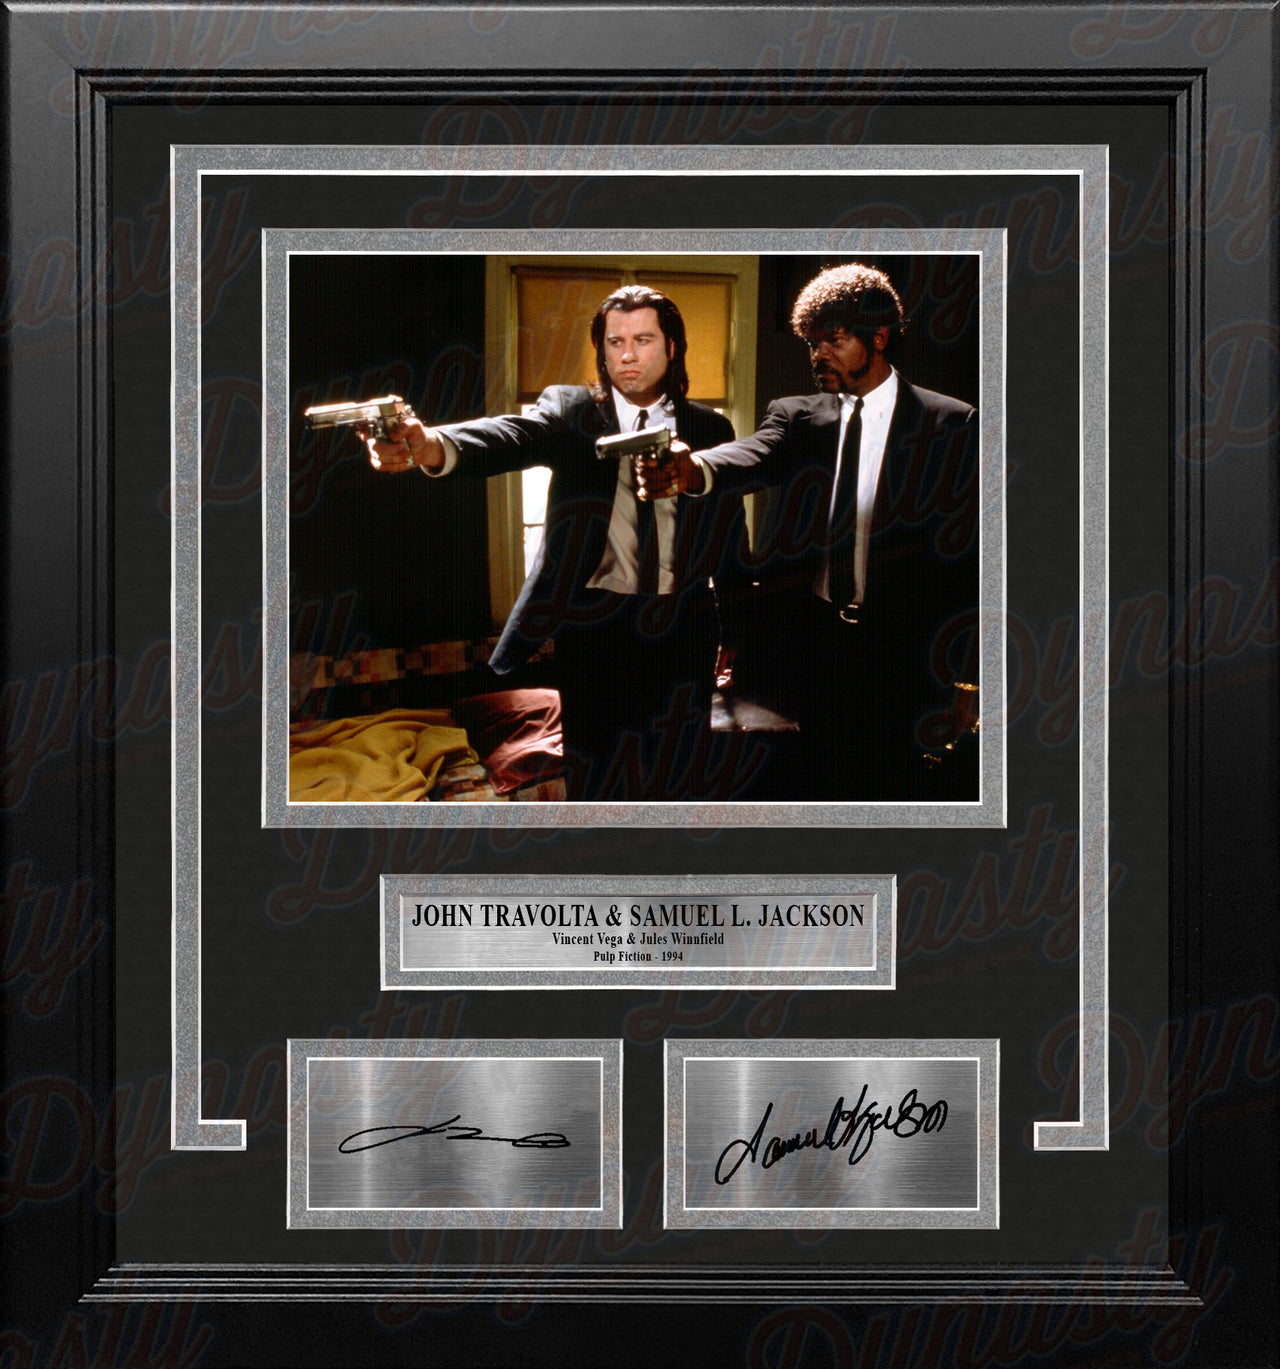 John Travolta & Samuel L. Jackson Pulp Fiction 8" x 10" Framed Photo with Engraved Autographs - Dynasty Sports & Framing 